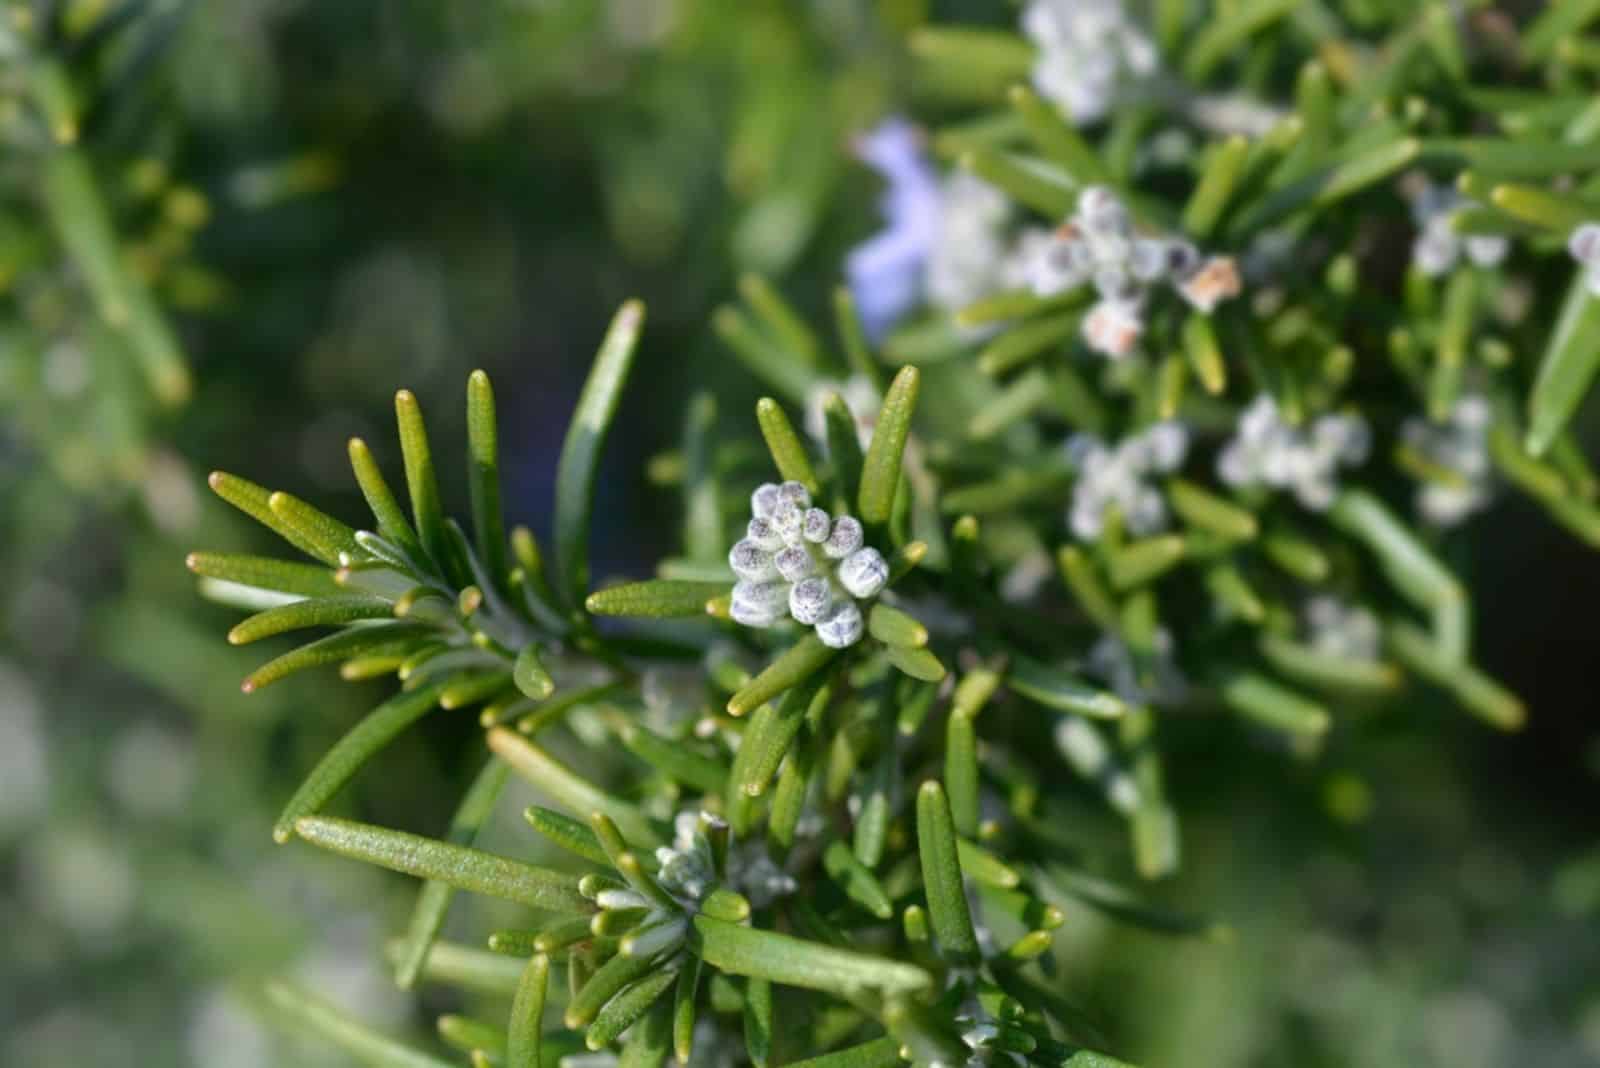 Rosemary flowers